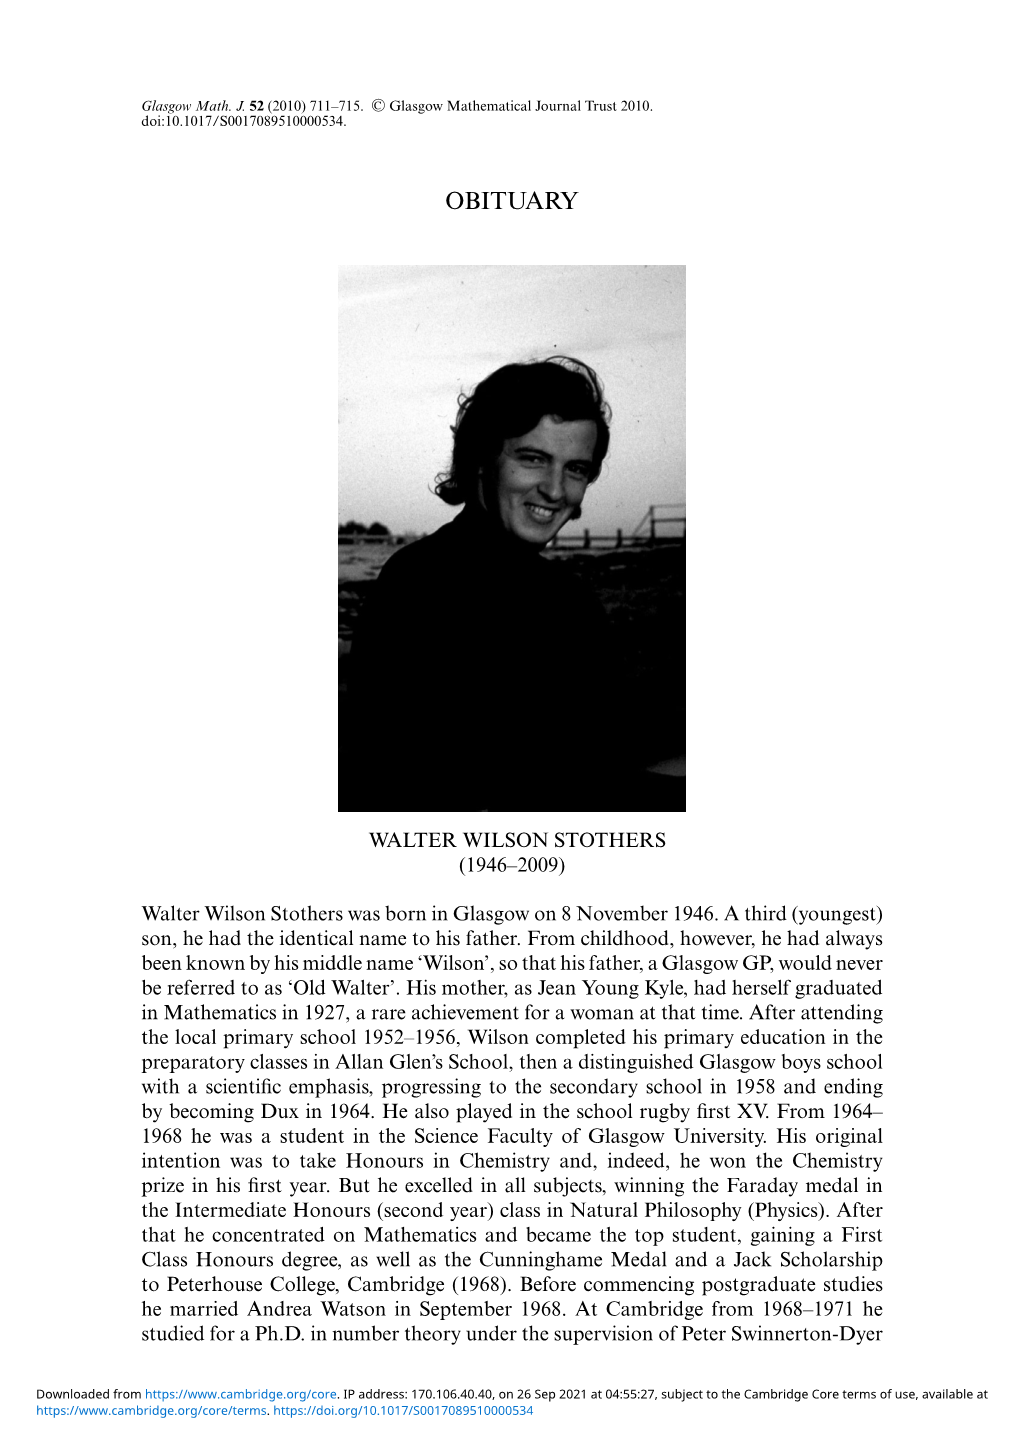 Walter Wilson Stothers (1946–2009)